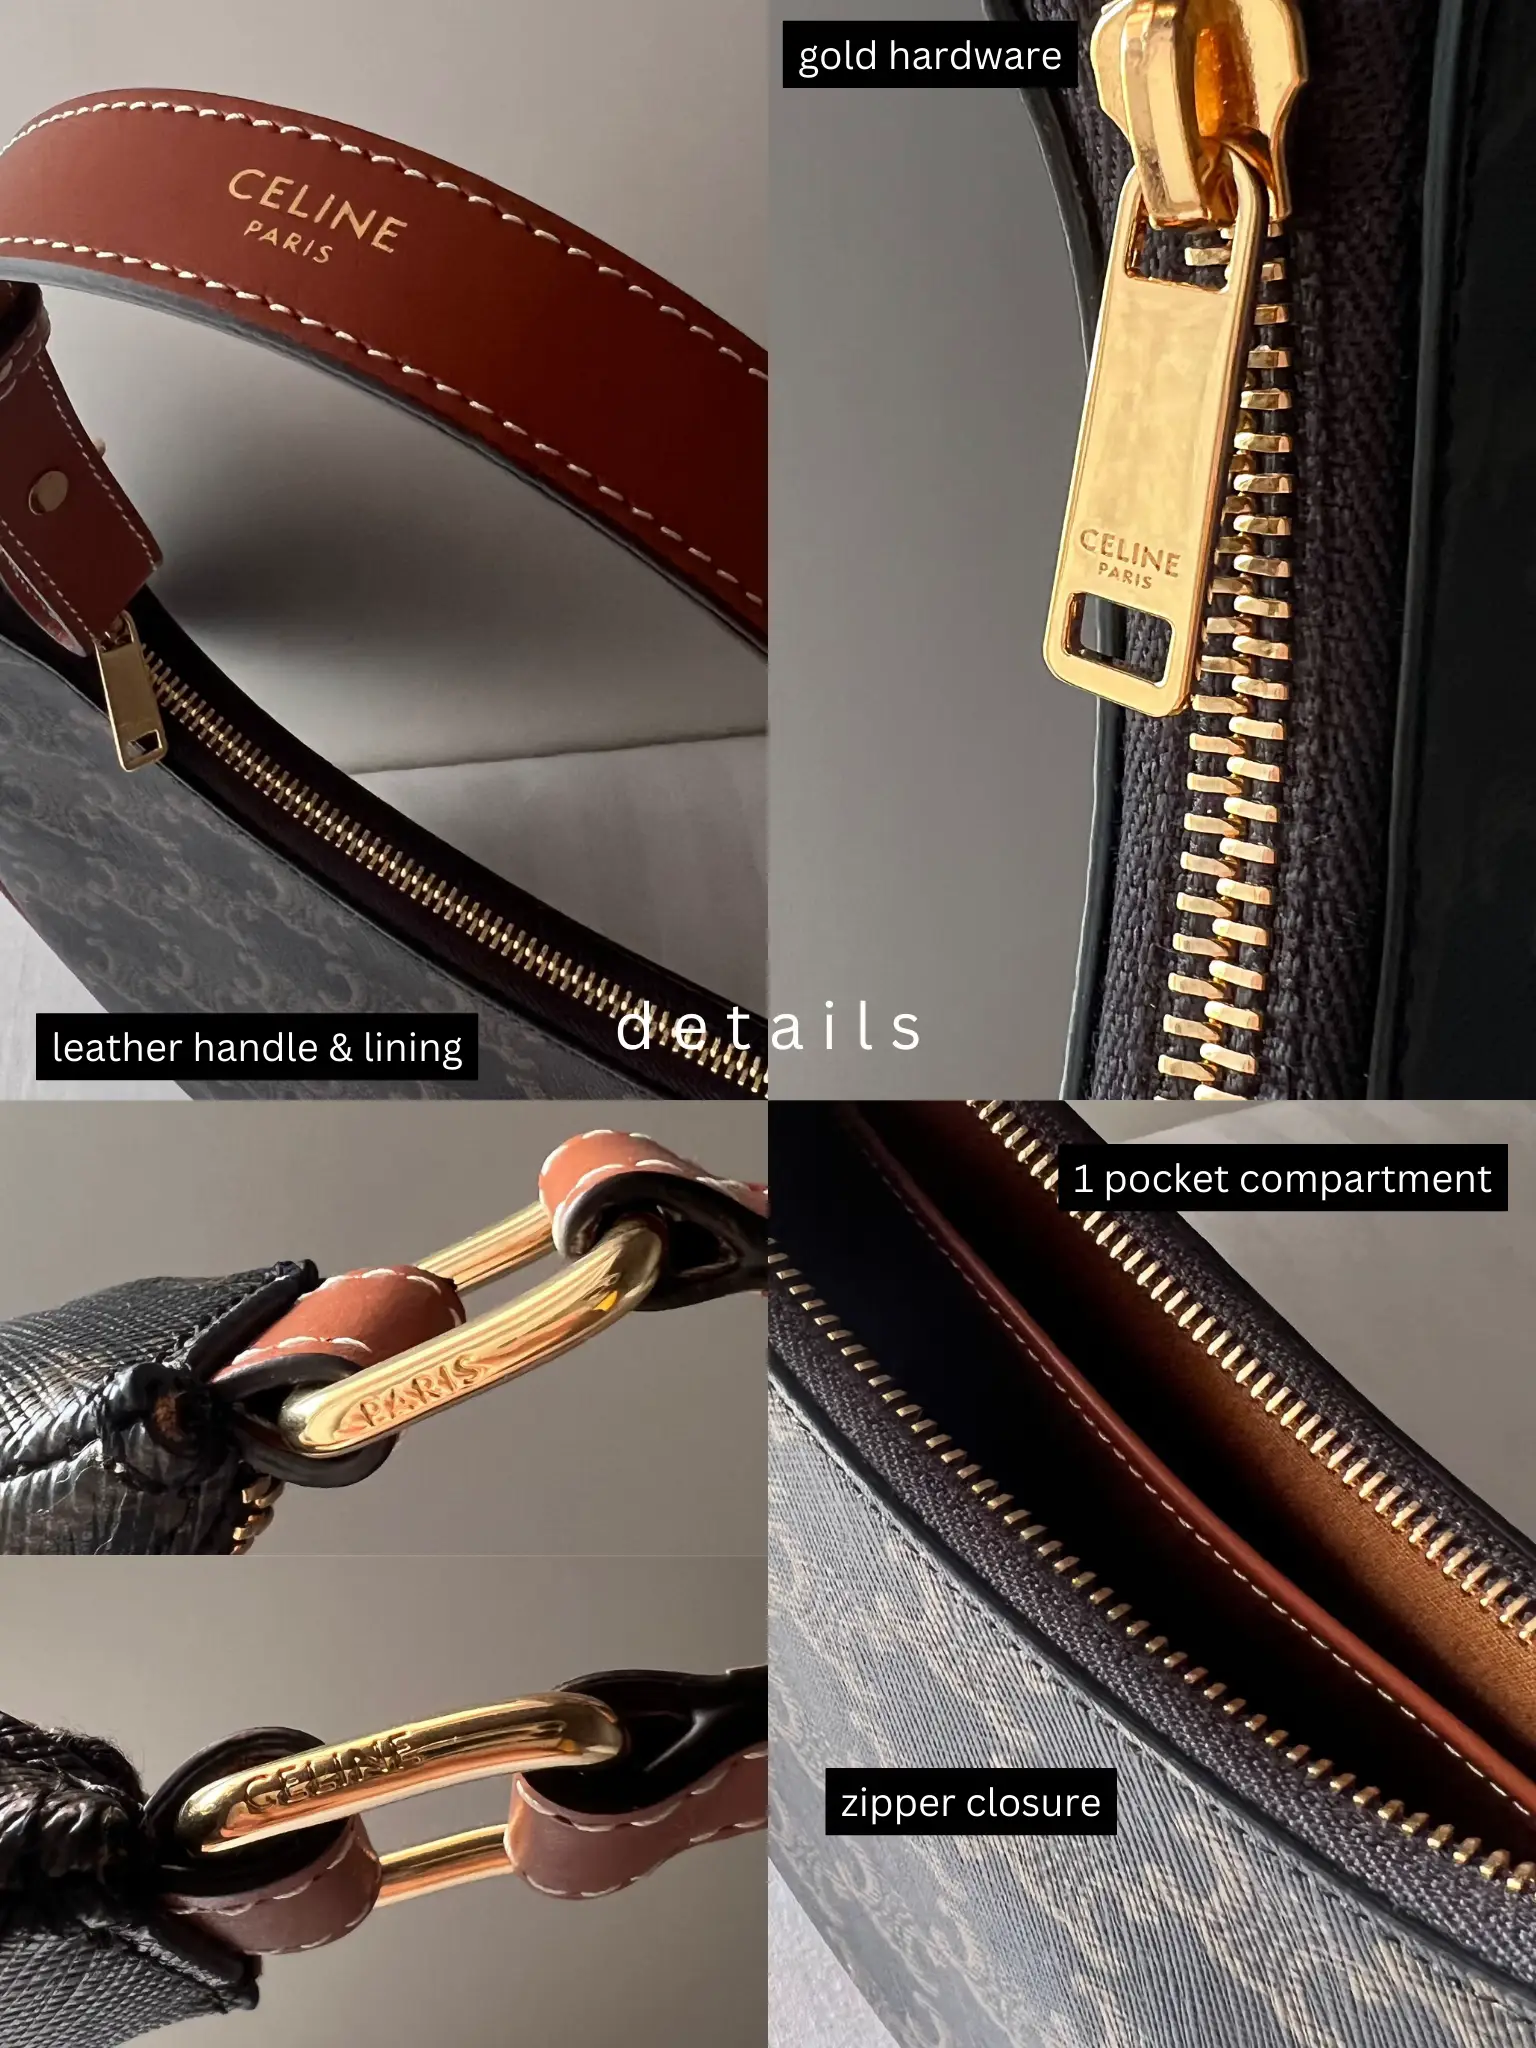 Best Styling Luxury Bag, Ava Celine 👛, Gallery posted by Natasha Lee